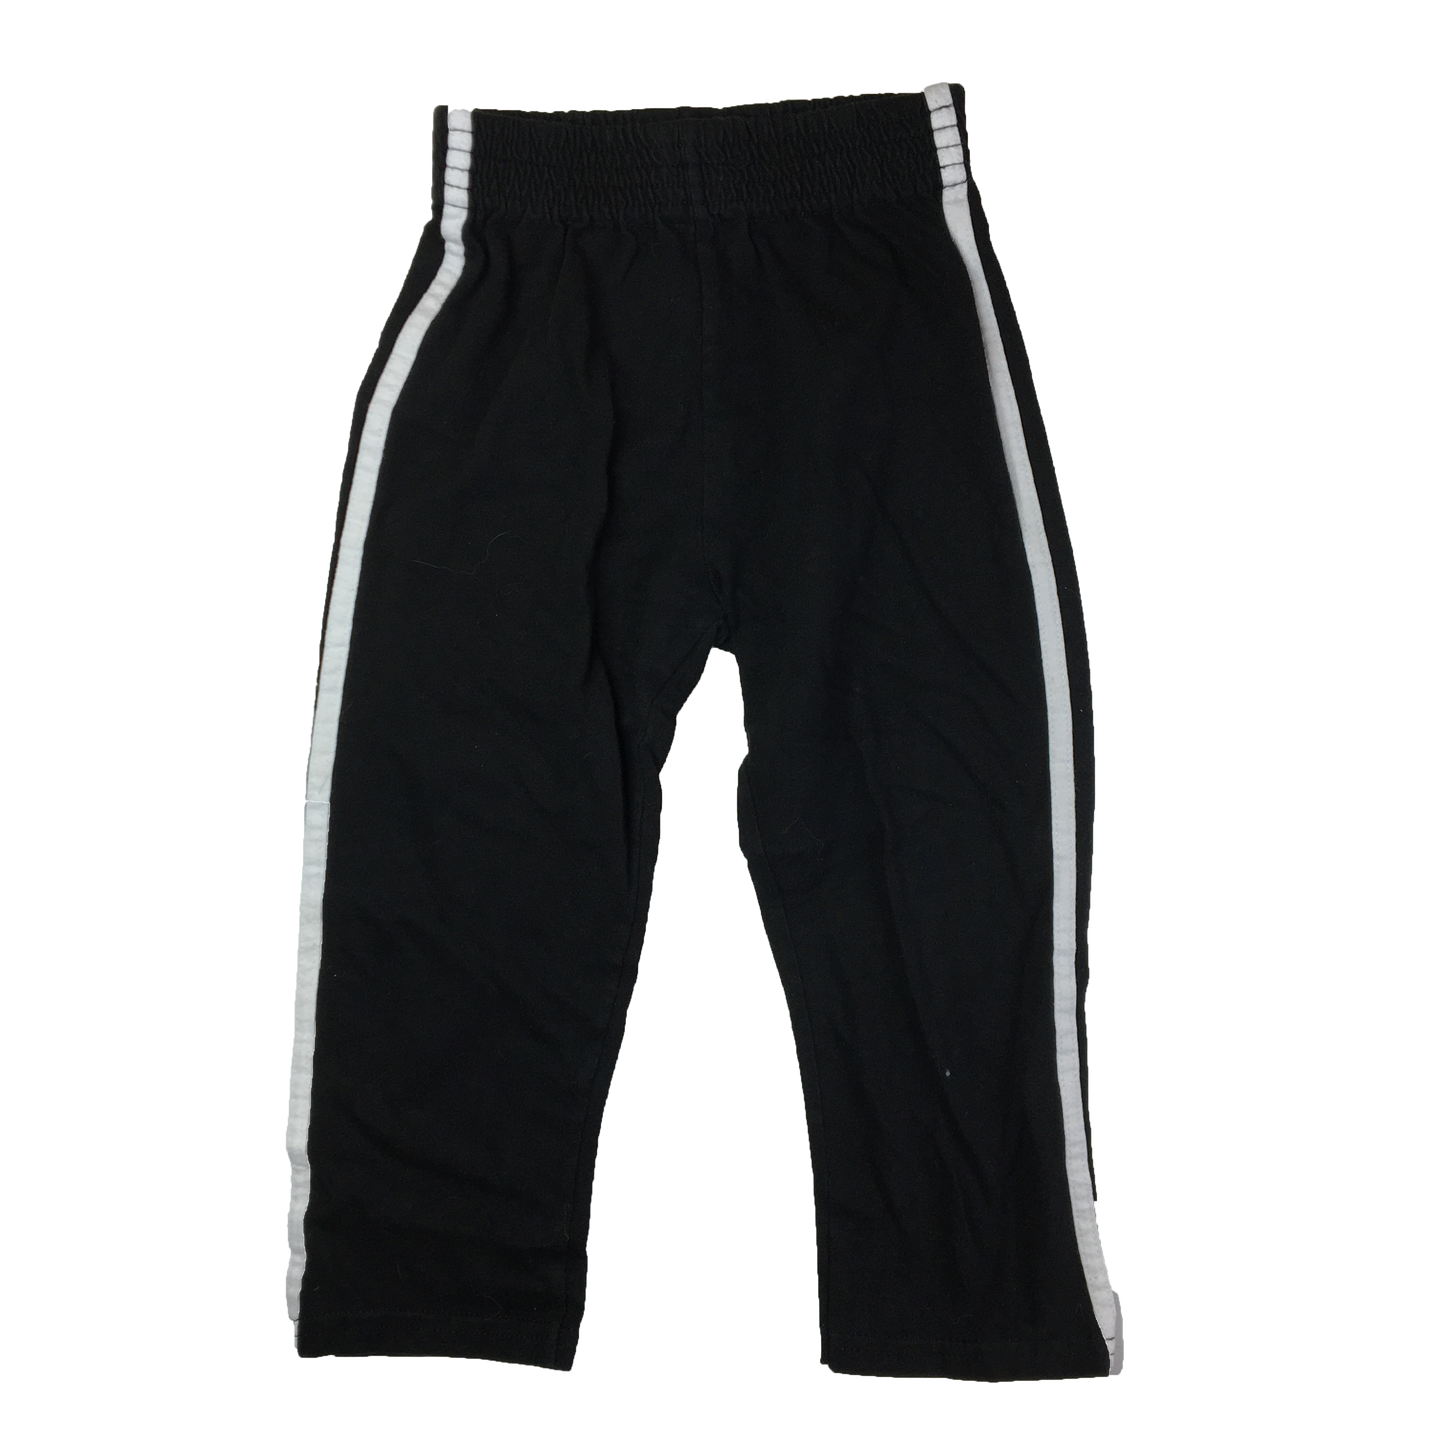 Garanimals Black Sweatpants with White Stripes 2T